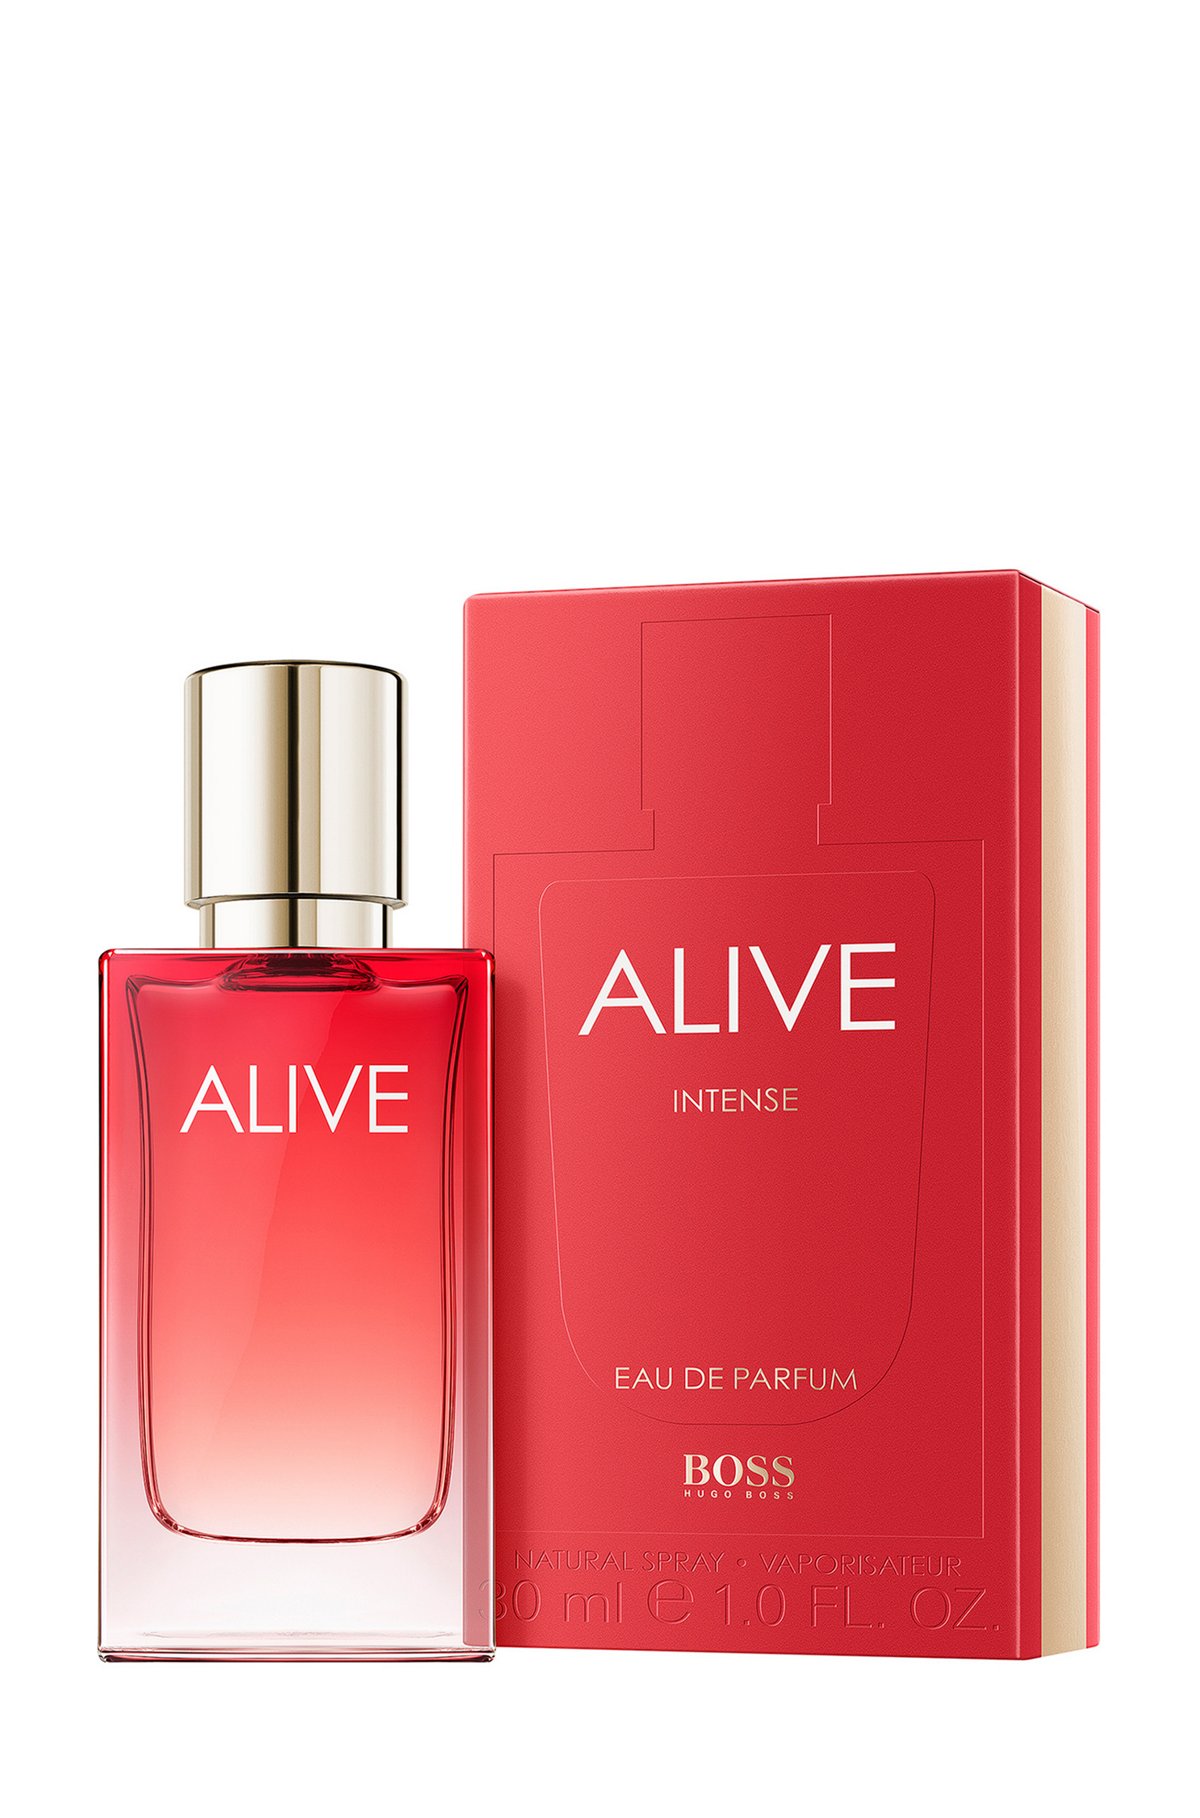 BOSS Alive Intense eau de parfum 30 ml, Assorted-Pre-Pack